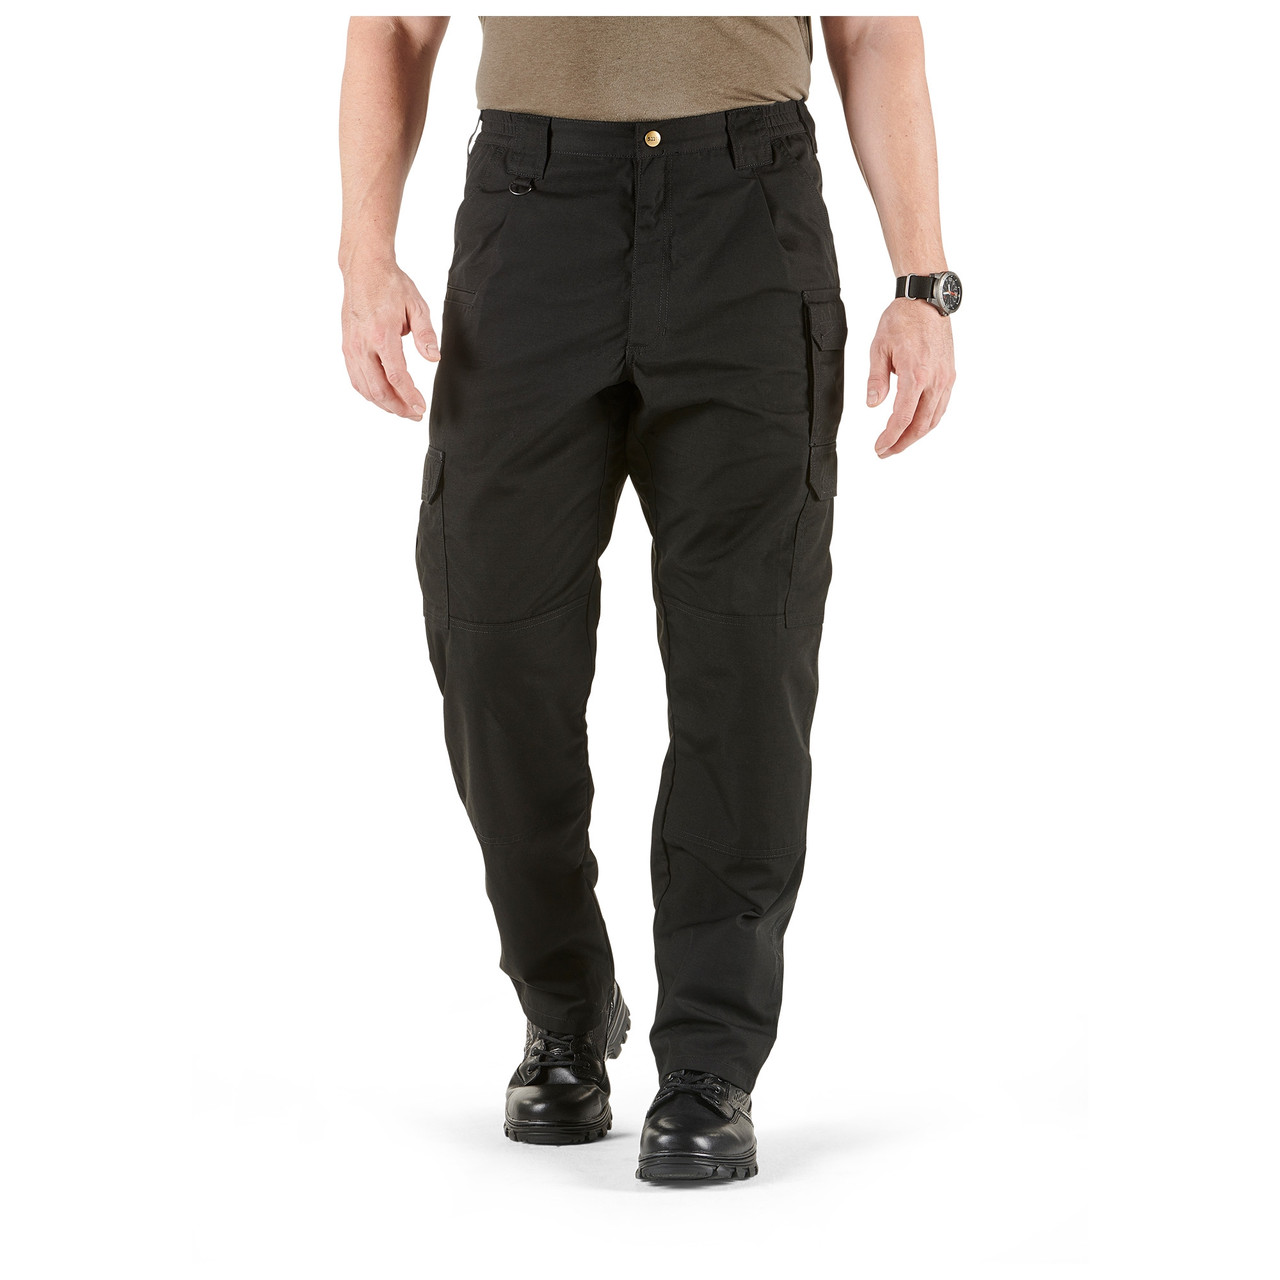 5.11 Taclite Pro Pants (Dark Navy, Black, Khaki)